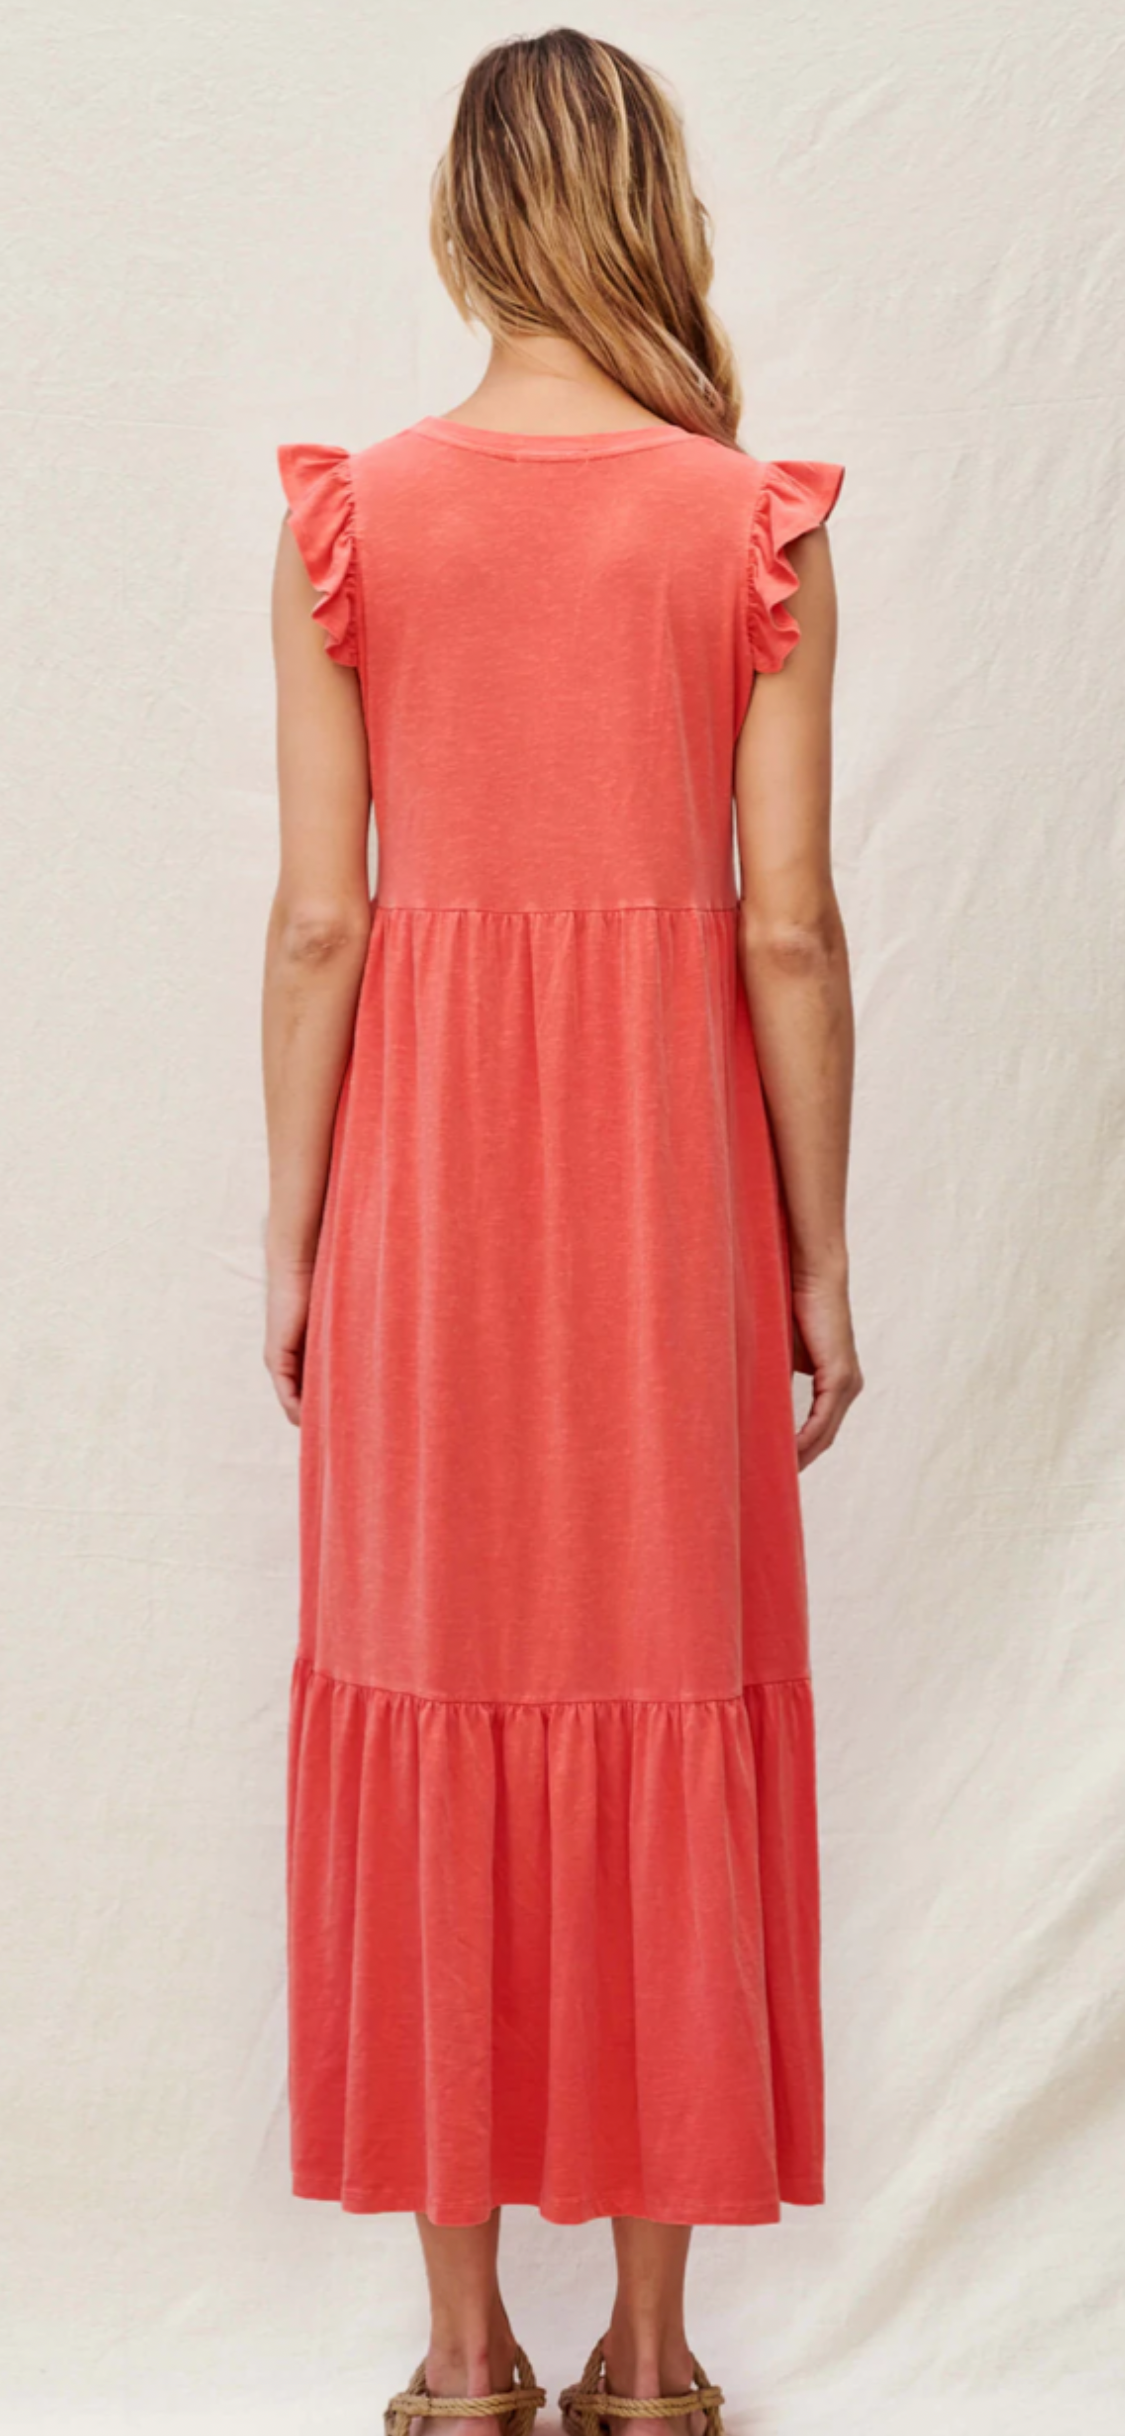 SUNDRY- Ruffle Sleeve Tier Dress Pigment Cherry